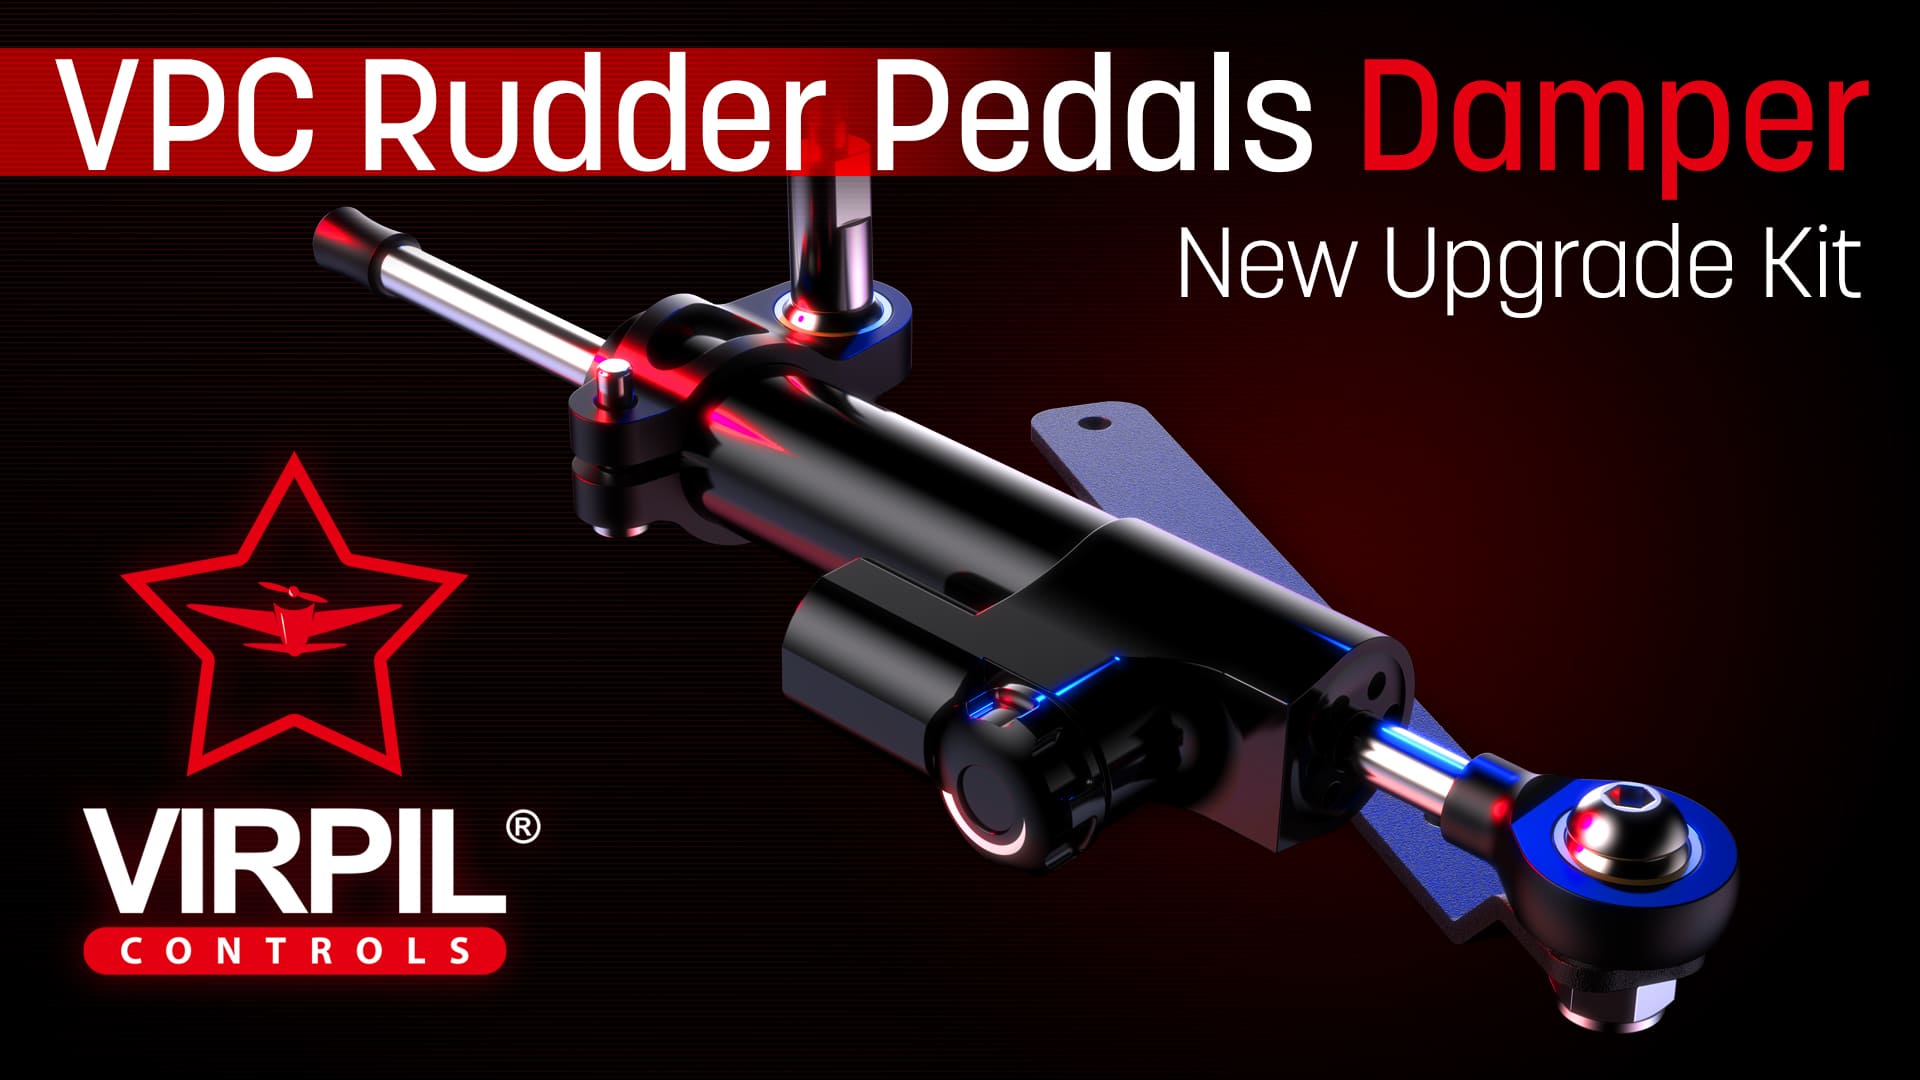 Встречайте комплект апгрейда для педалей VPC Rudder Pedals - Damper Kit!